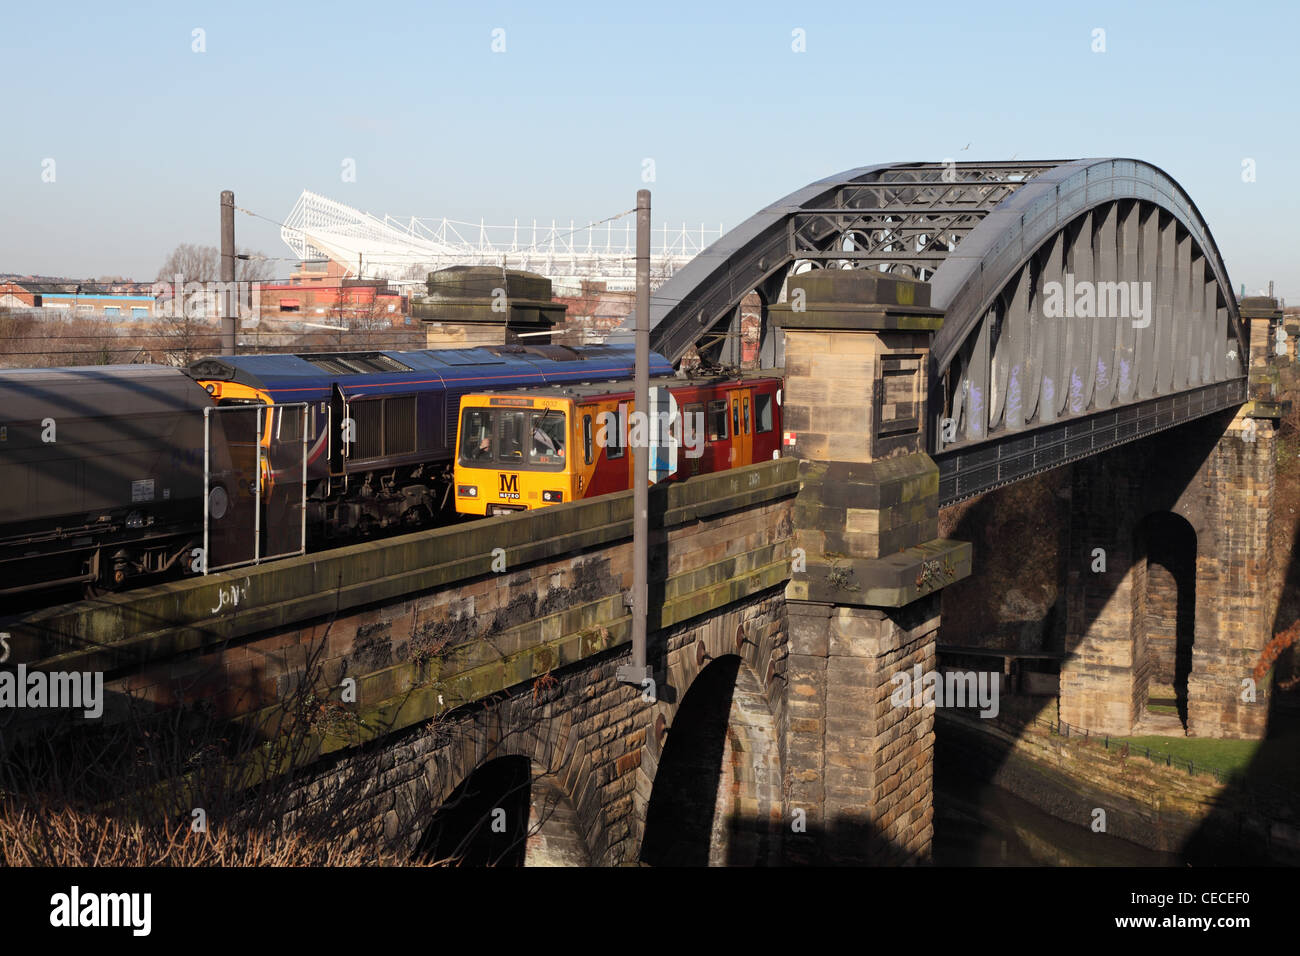 A Tyne and Wear Metro train passes a coal train on Wearmouth rail bridge Sunderland north east England UK Stock Photo